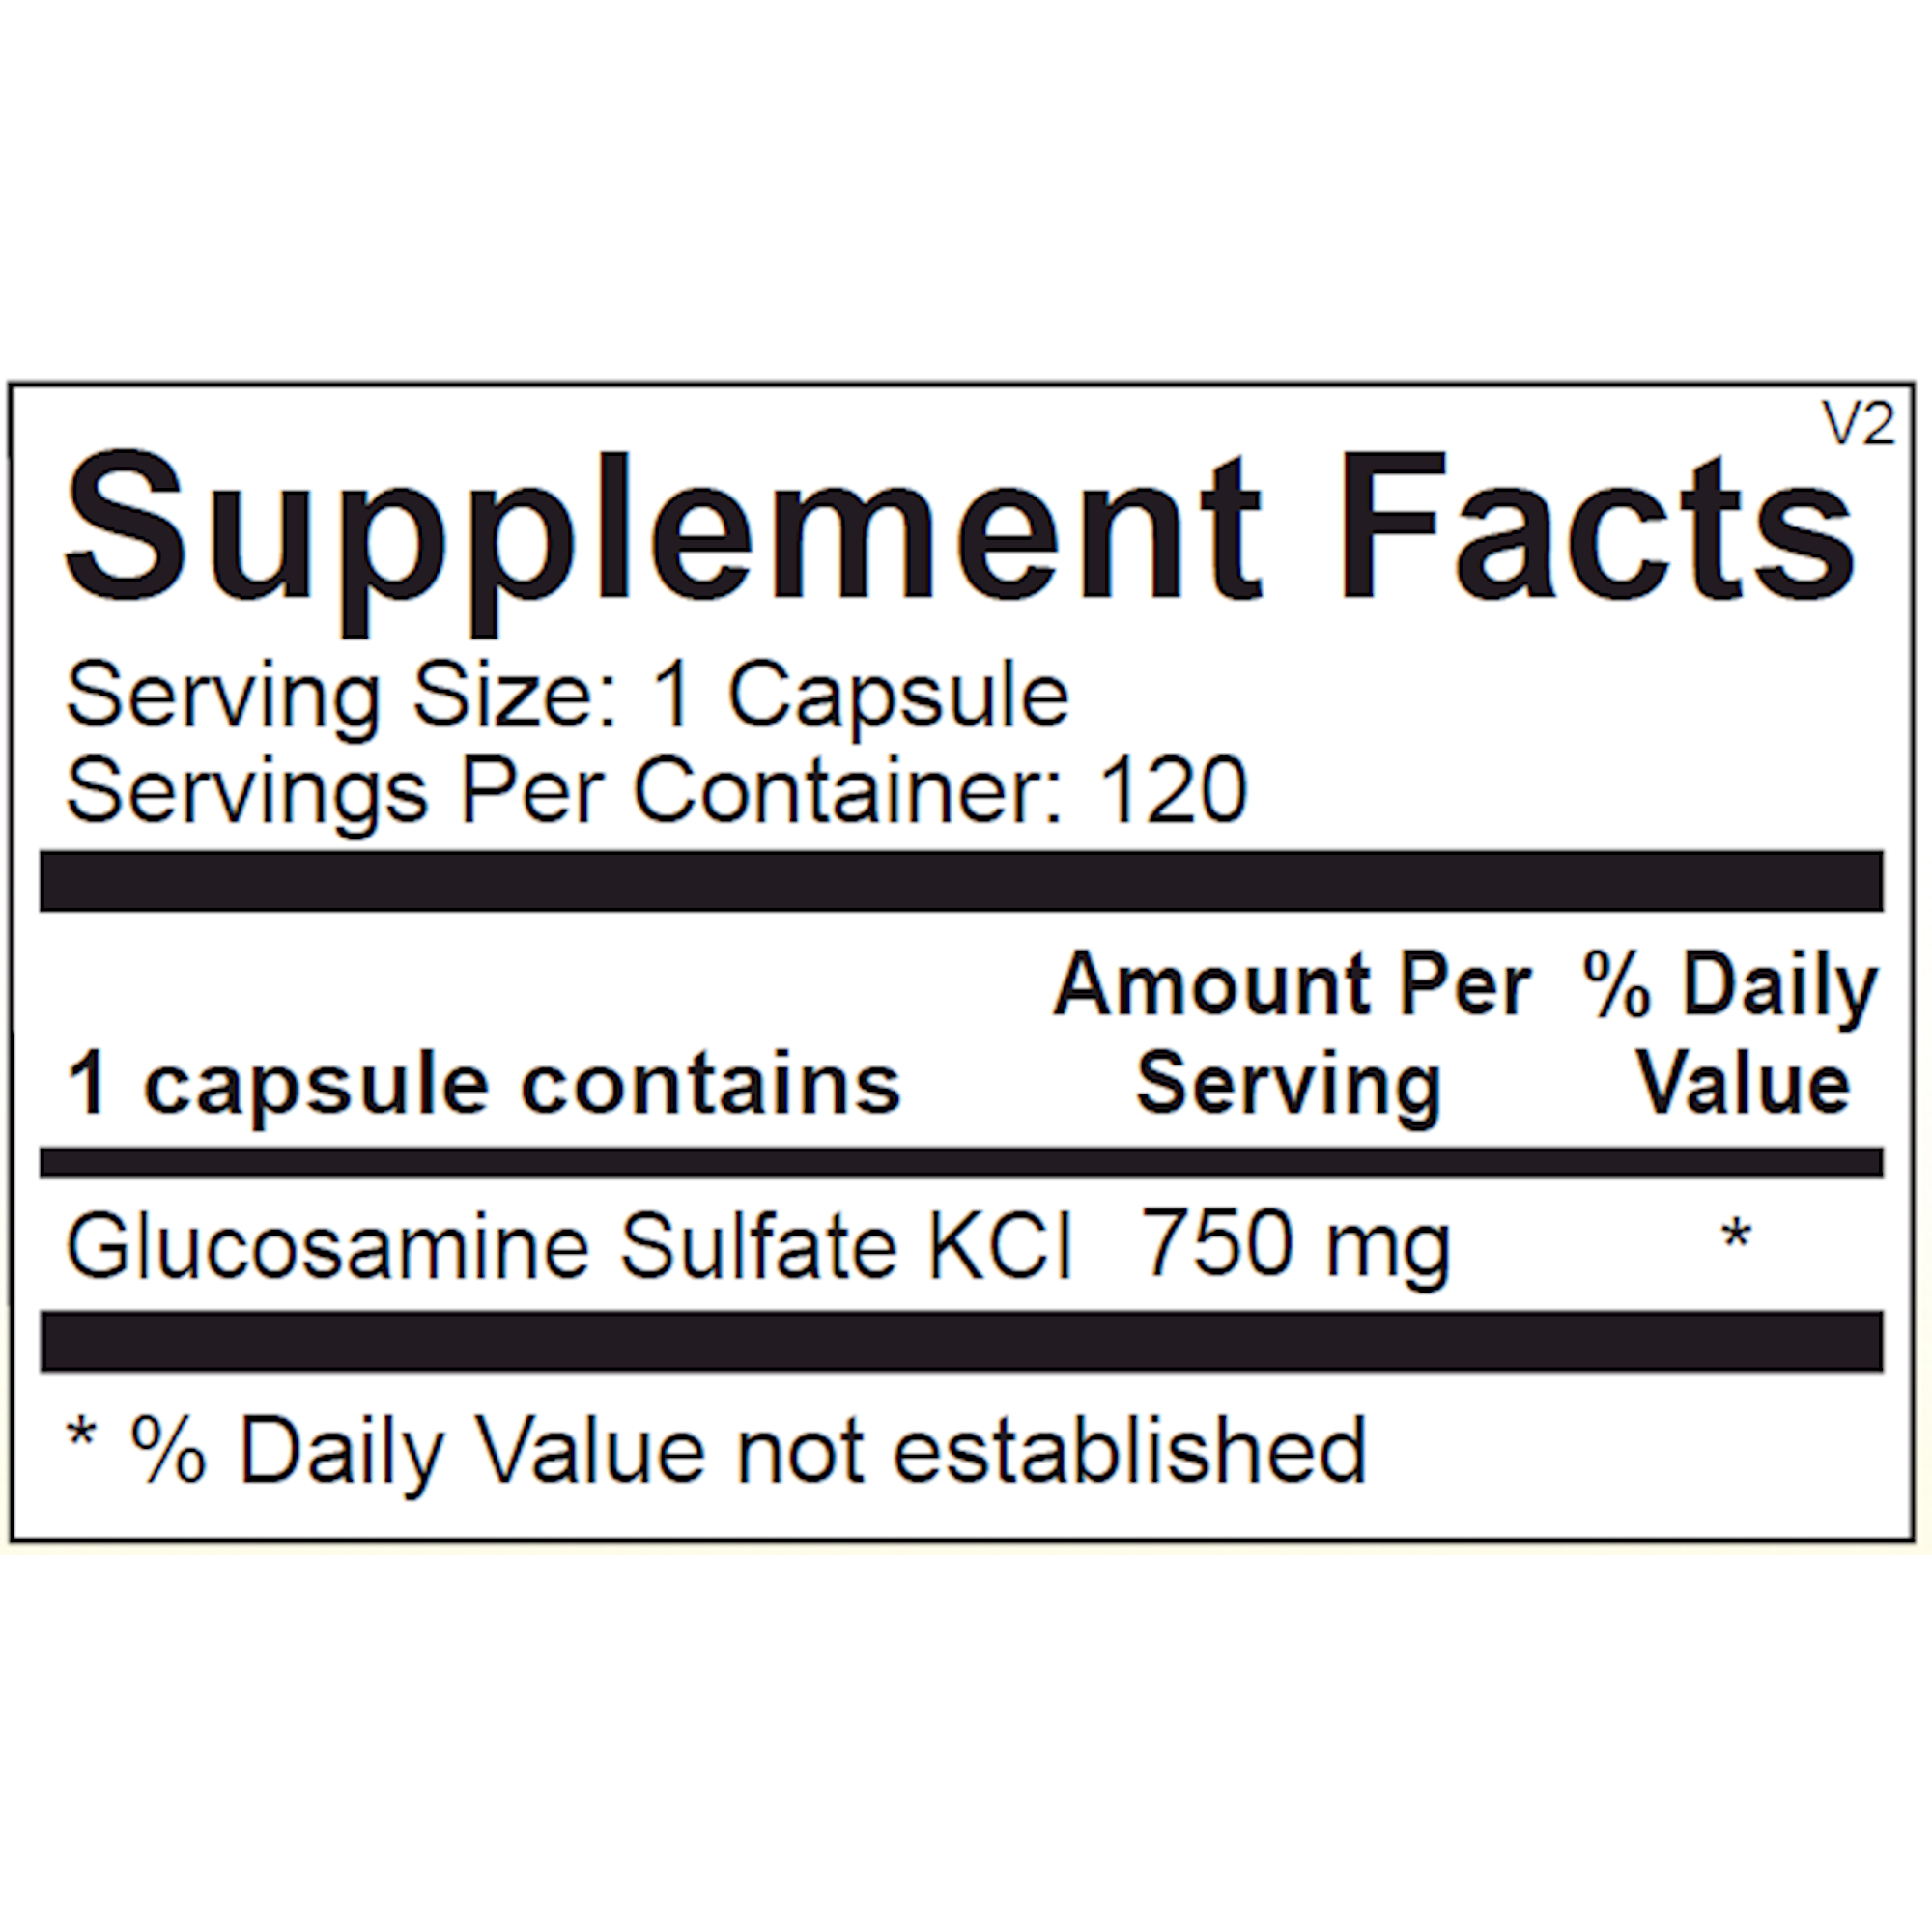 Glucosamine Sulfate 120 Caps Ortho Molecular-Deals